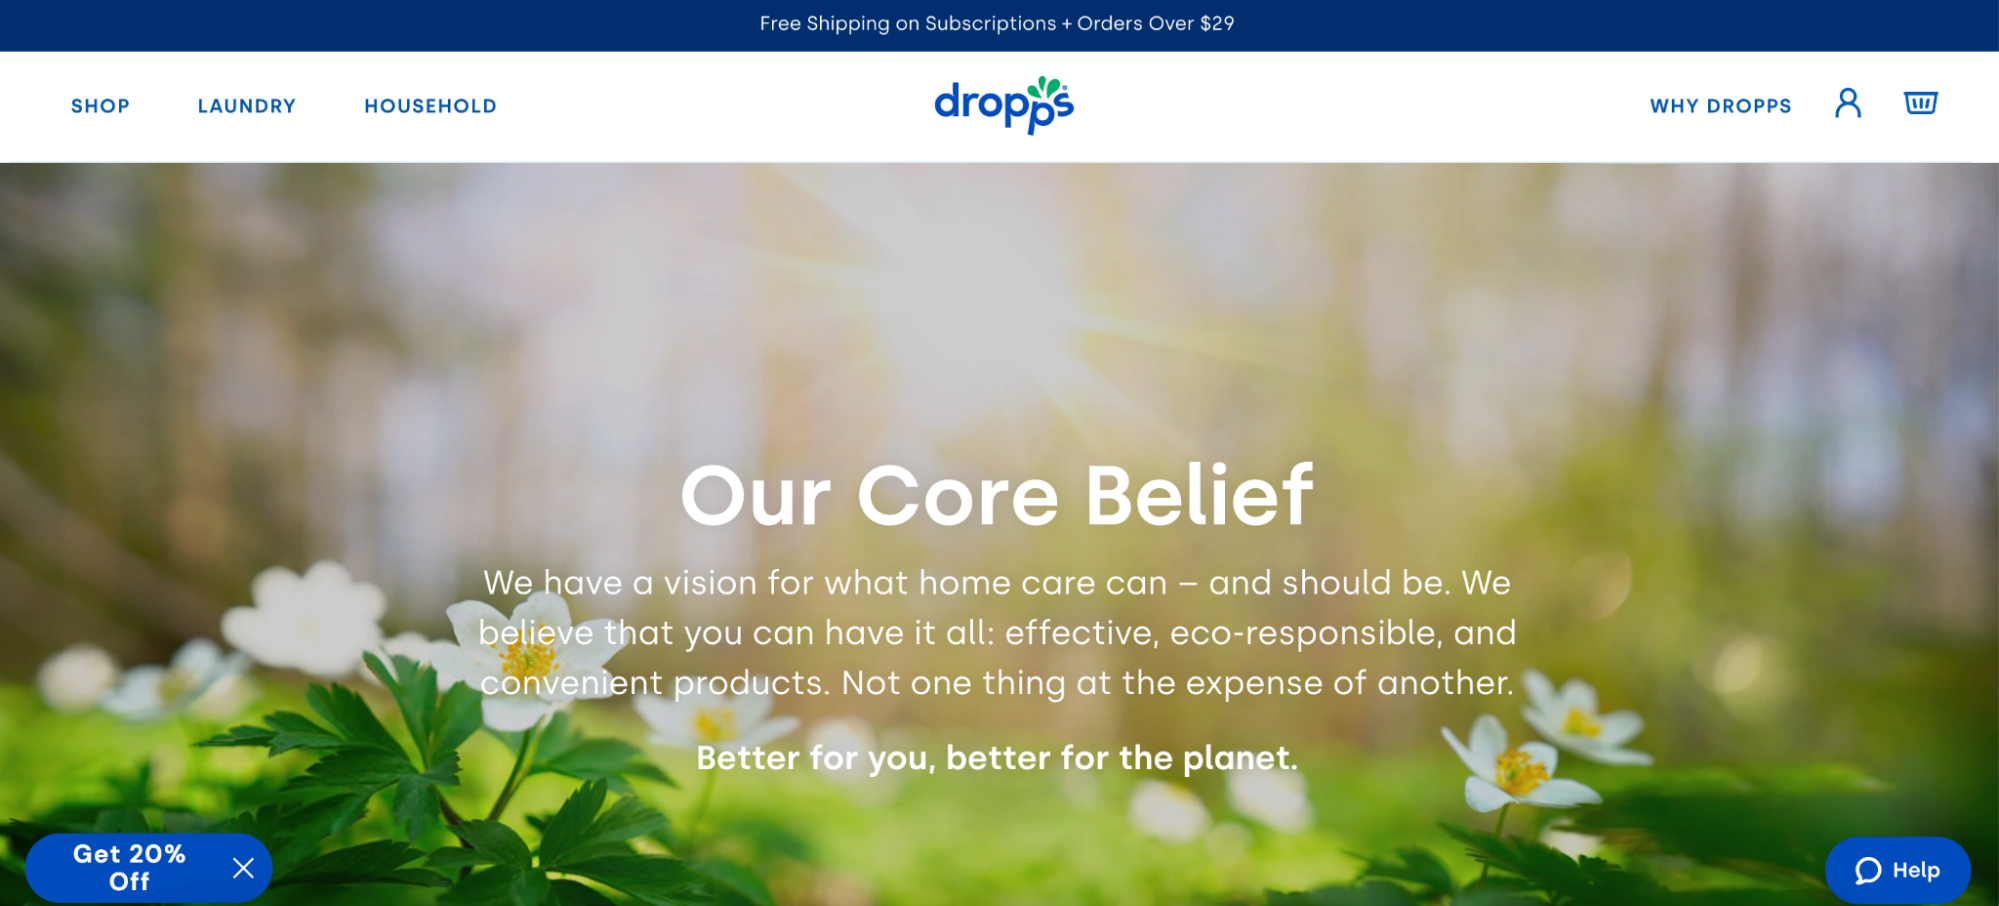 Screenshot of Dropps' website highlighting their core beliefs about building a green planet.